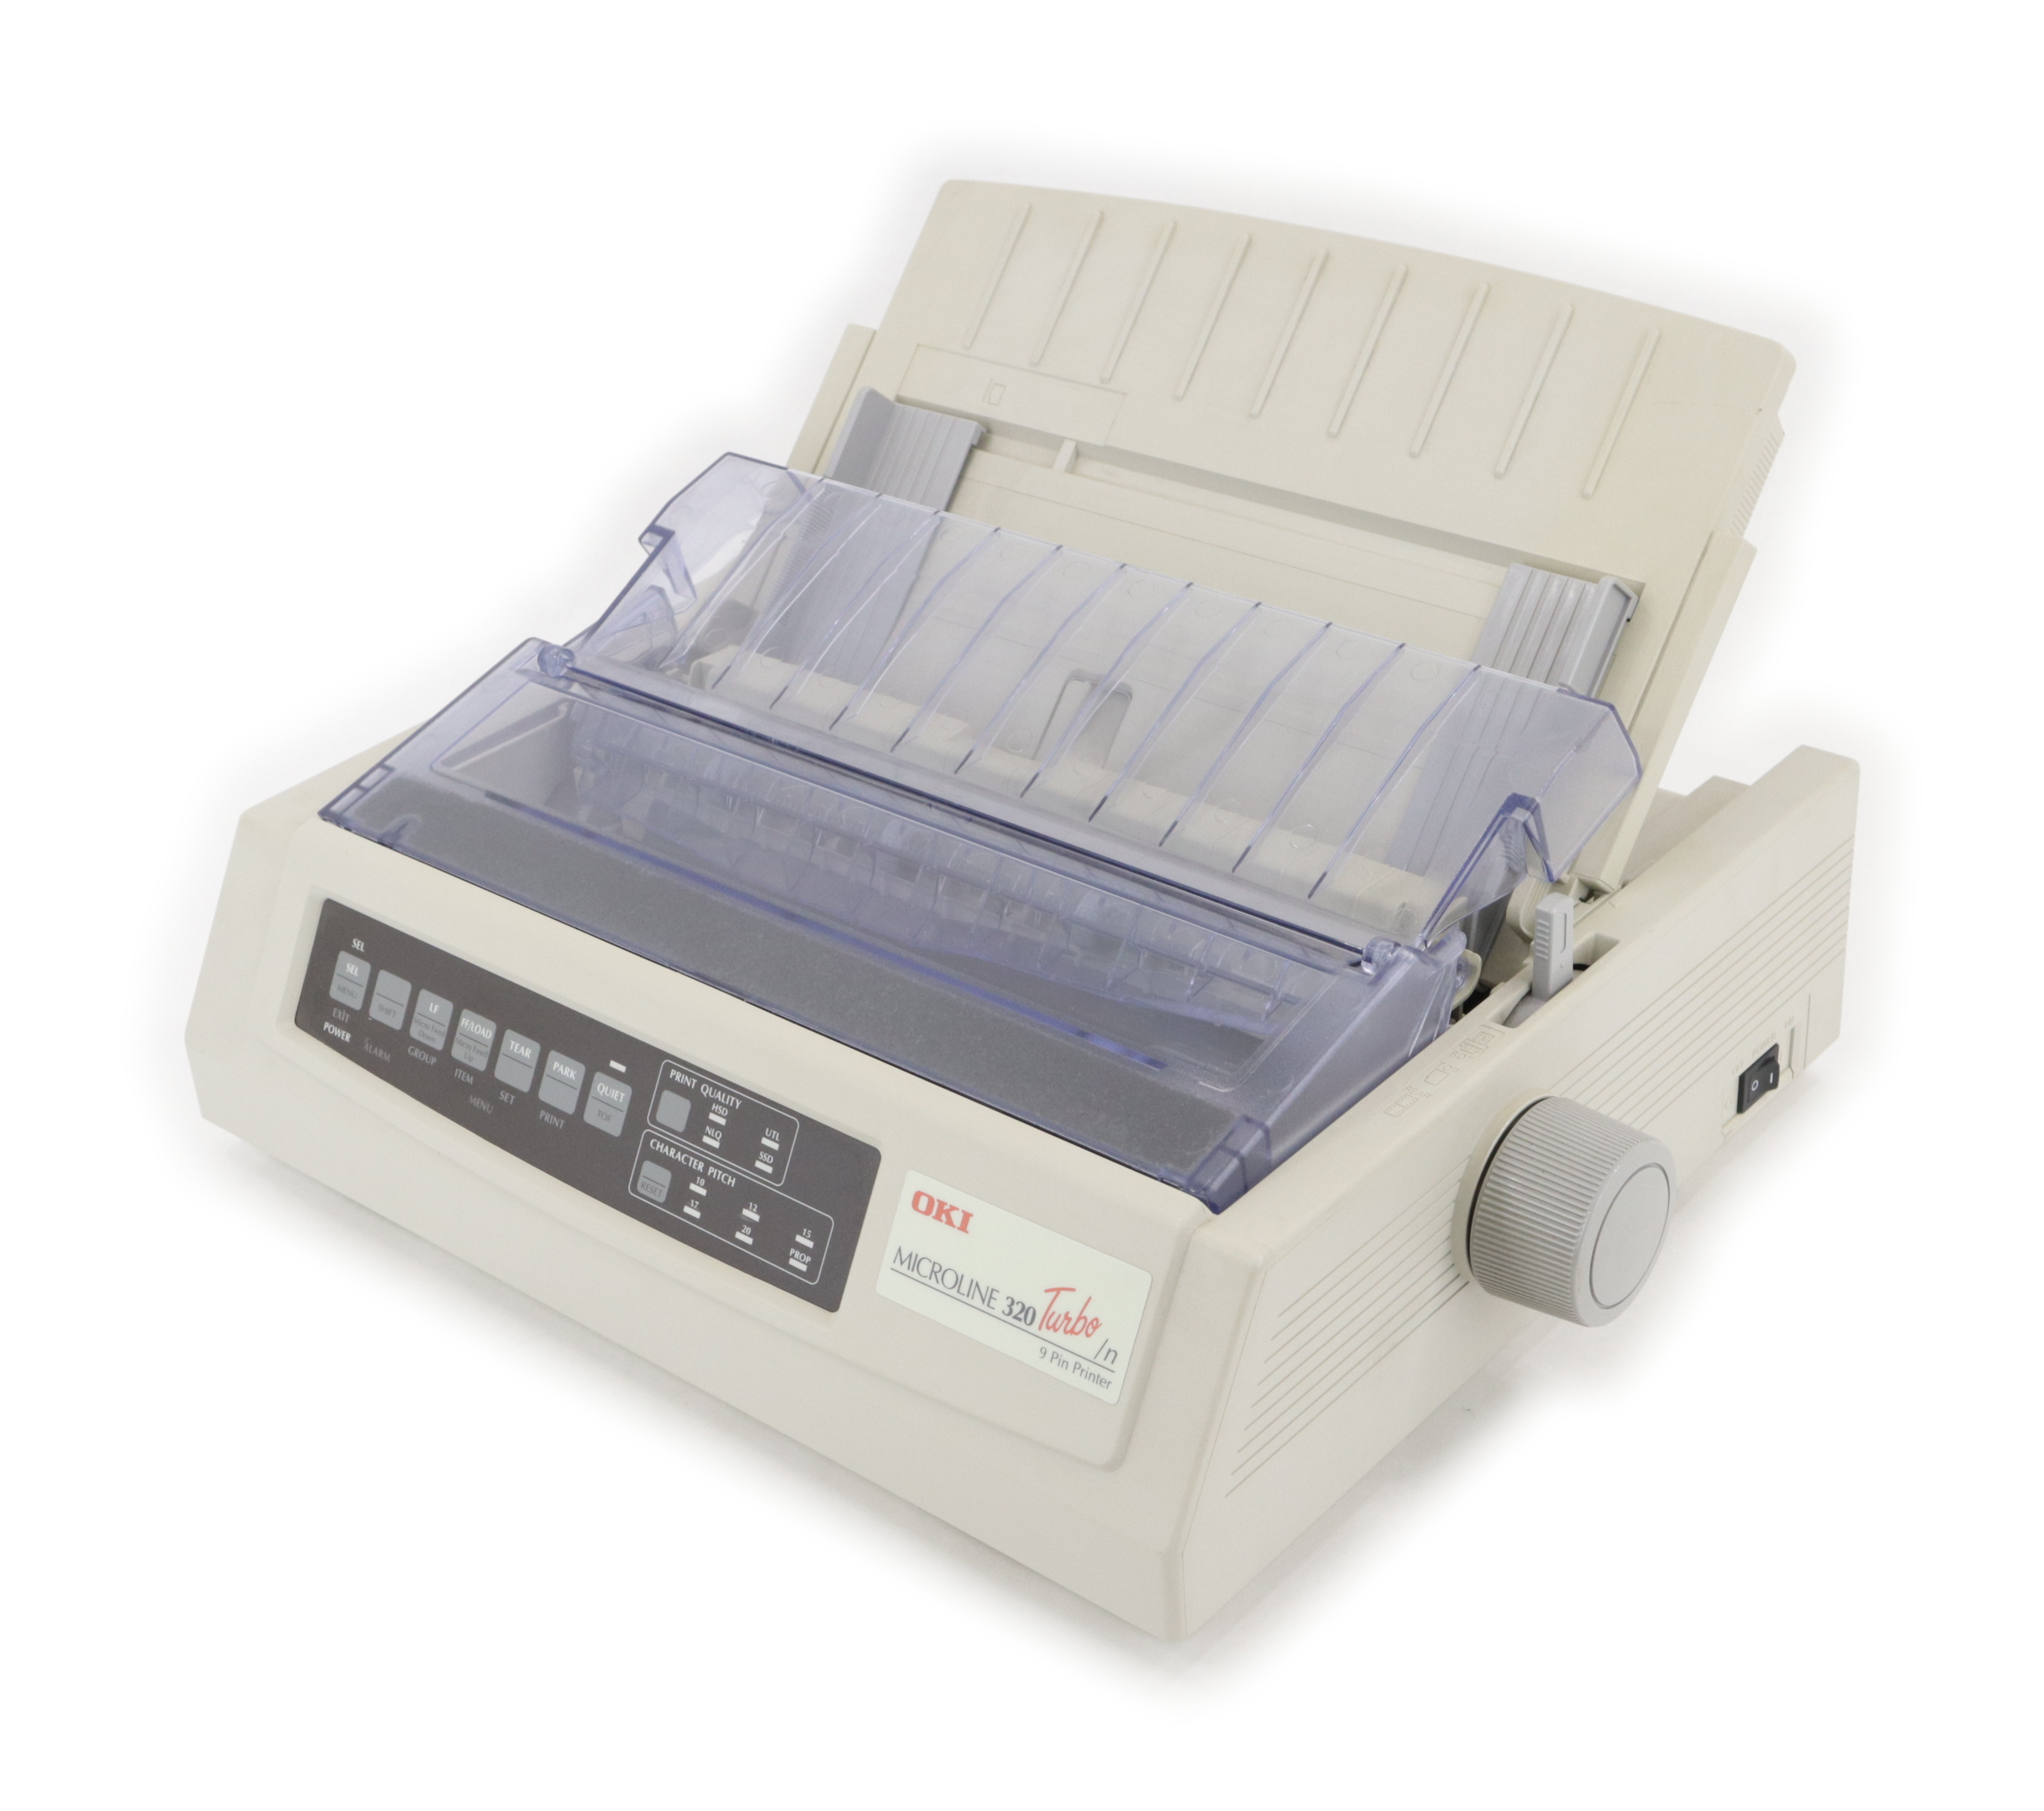 OKI Data Microline 320 Turbo/n 9-pin Dot Matrix Printer GE7000A